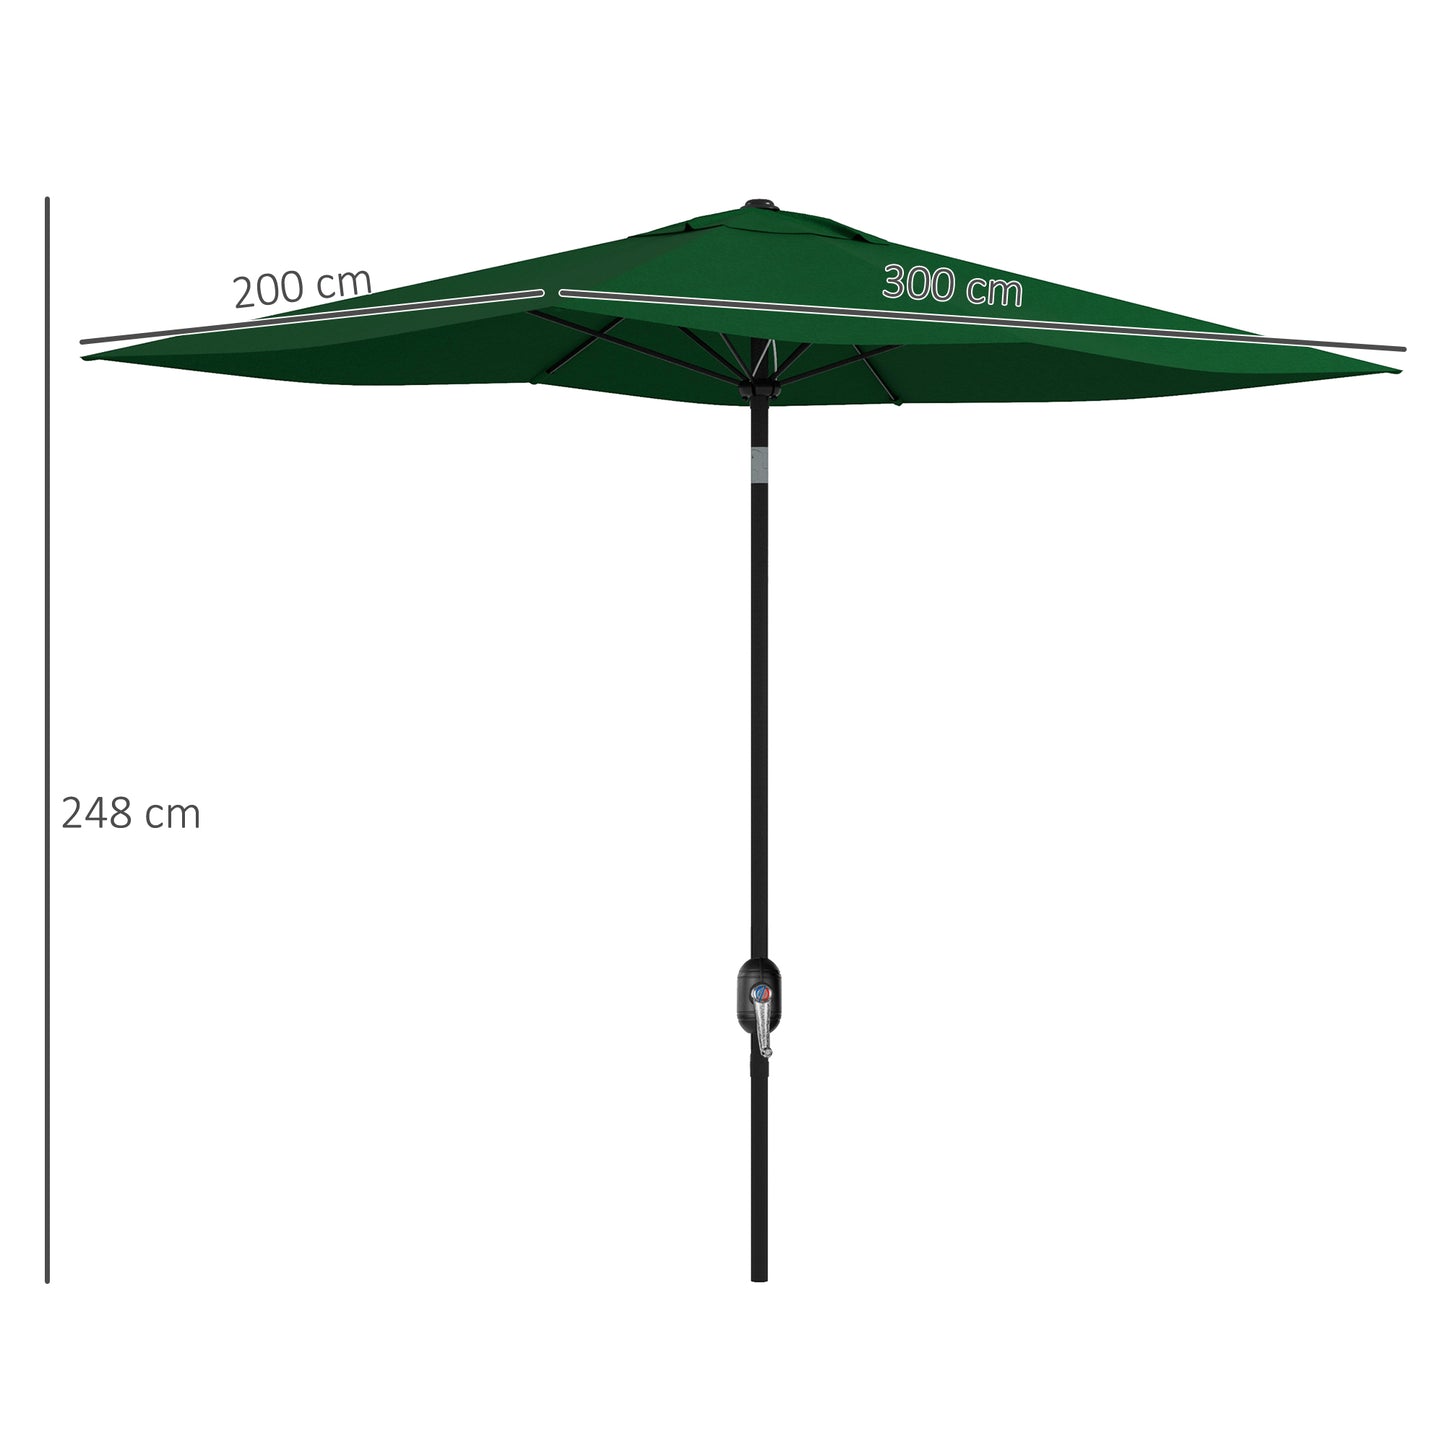 Outsunny Rectangular Patio Umbrella: 2x3m Crank & Tilt Canopy, 6 Ribs, Green